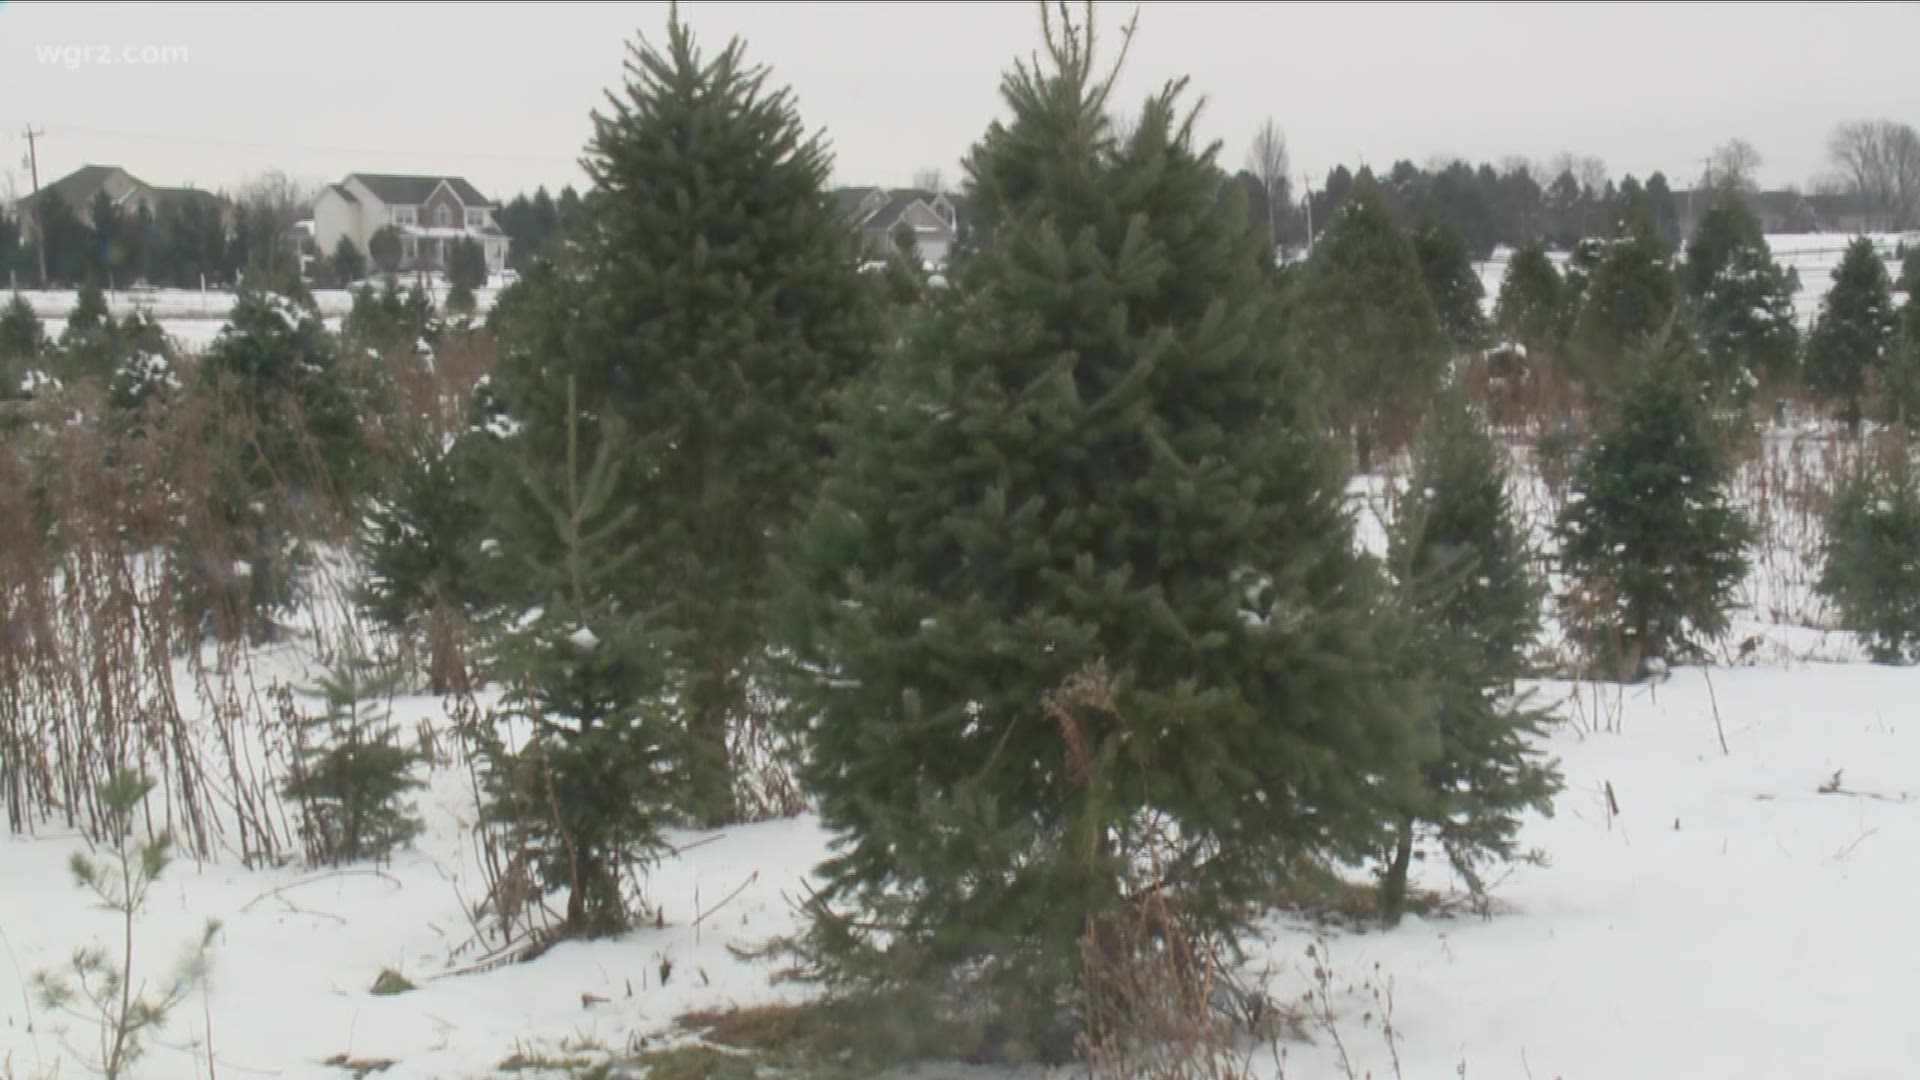 Christmas Tree Shortage In Parts Of U.S.